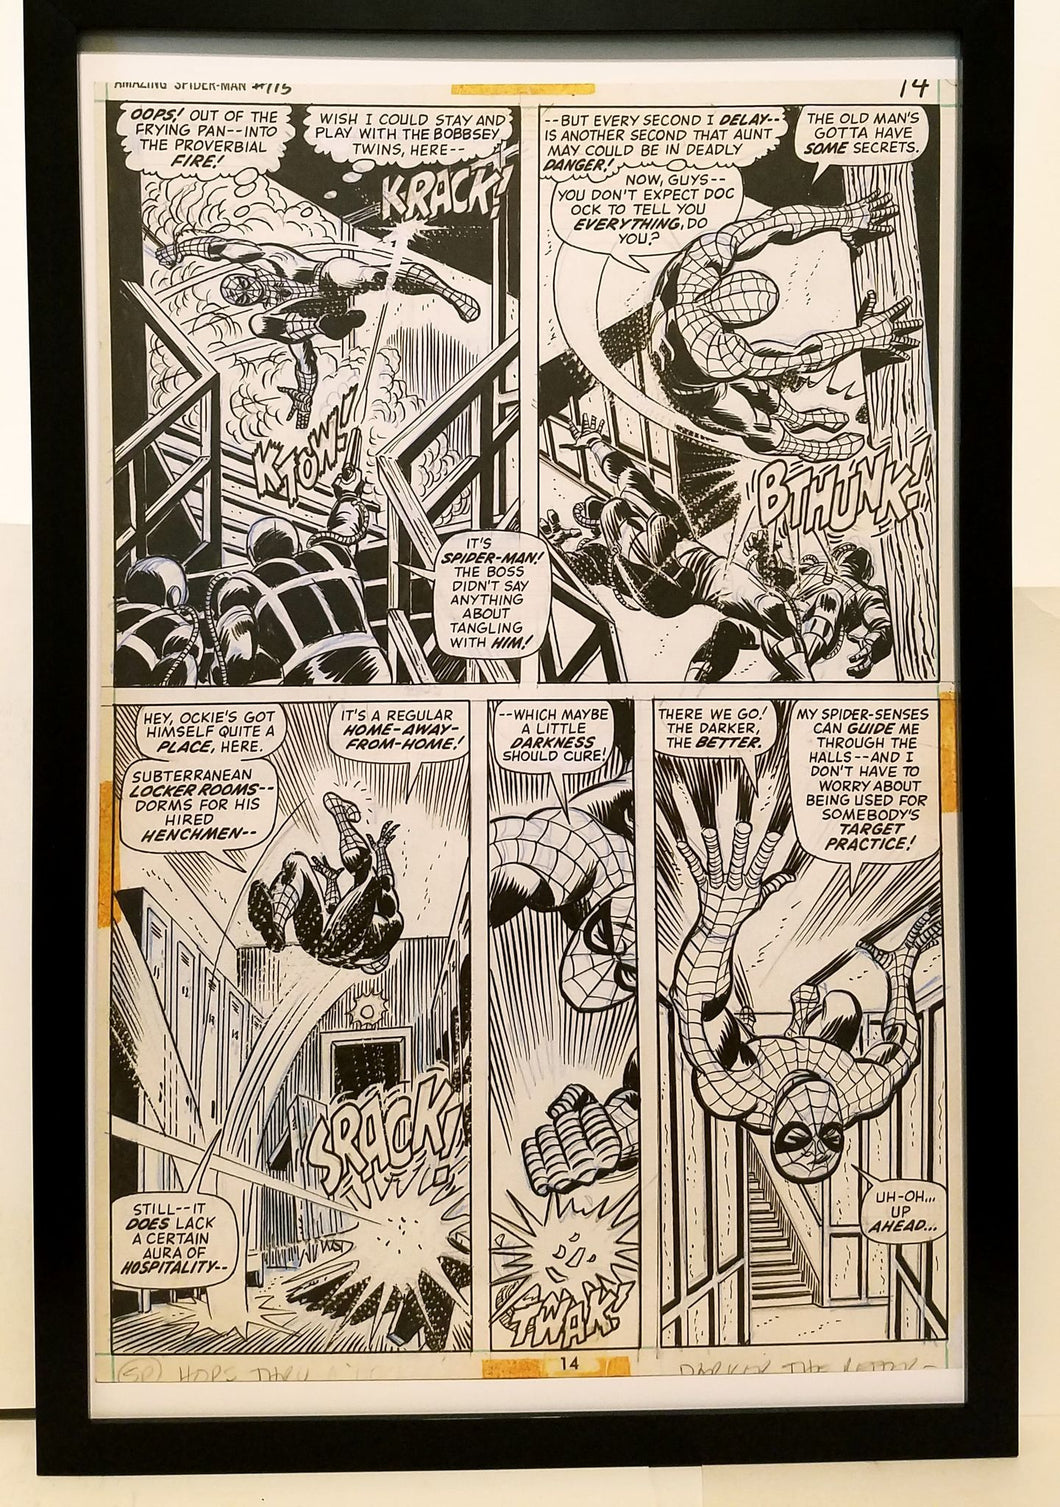 Amazing Spider-Man #115 pg. 14 John Romita 11x17 FRAMED Original Art Poster Marvel Comics